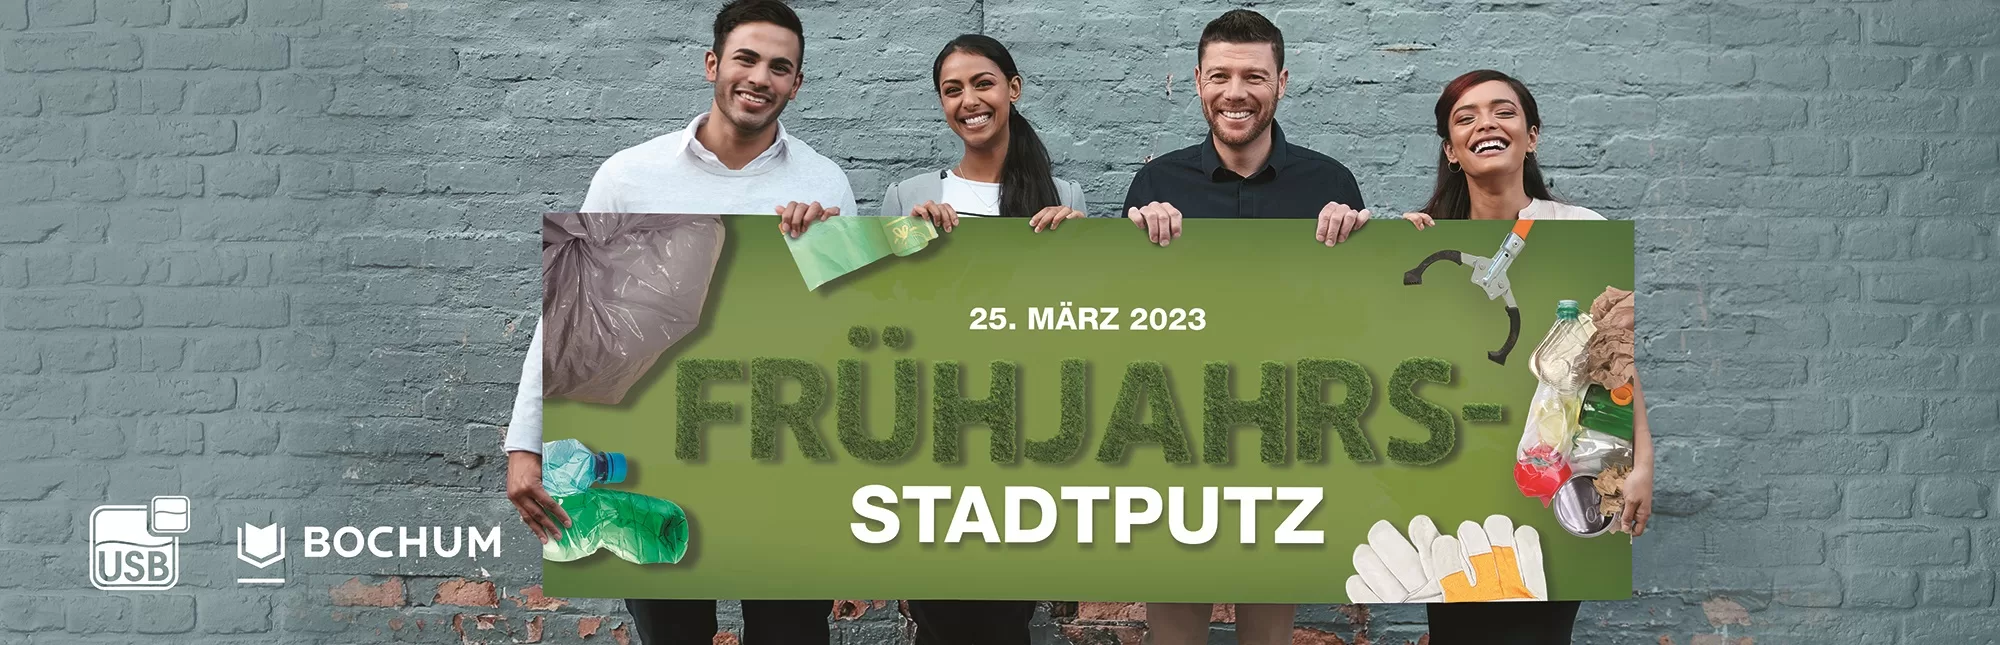 bochumer-fruehjahrs-stadtputz-2023